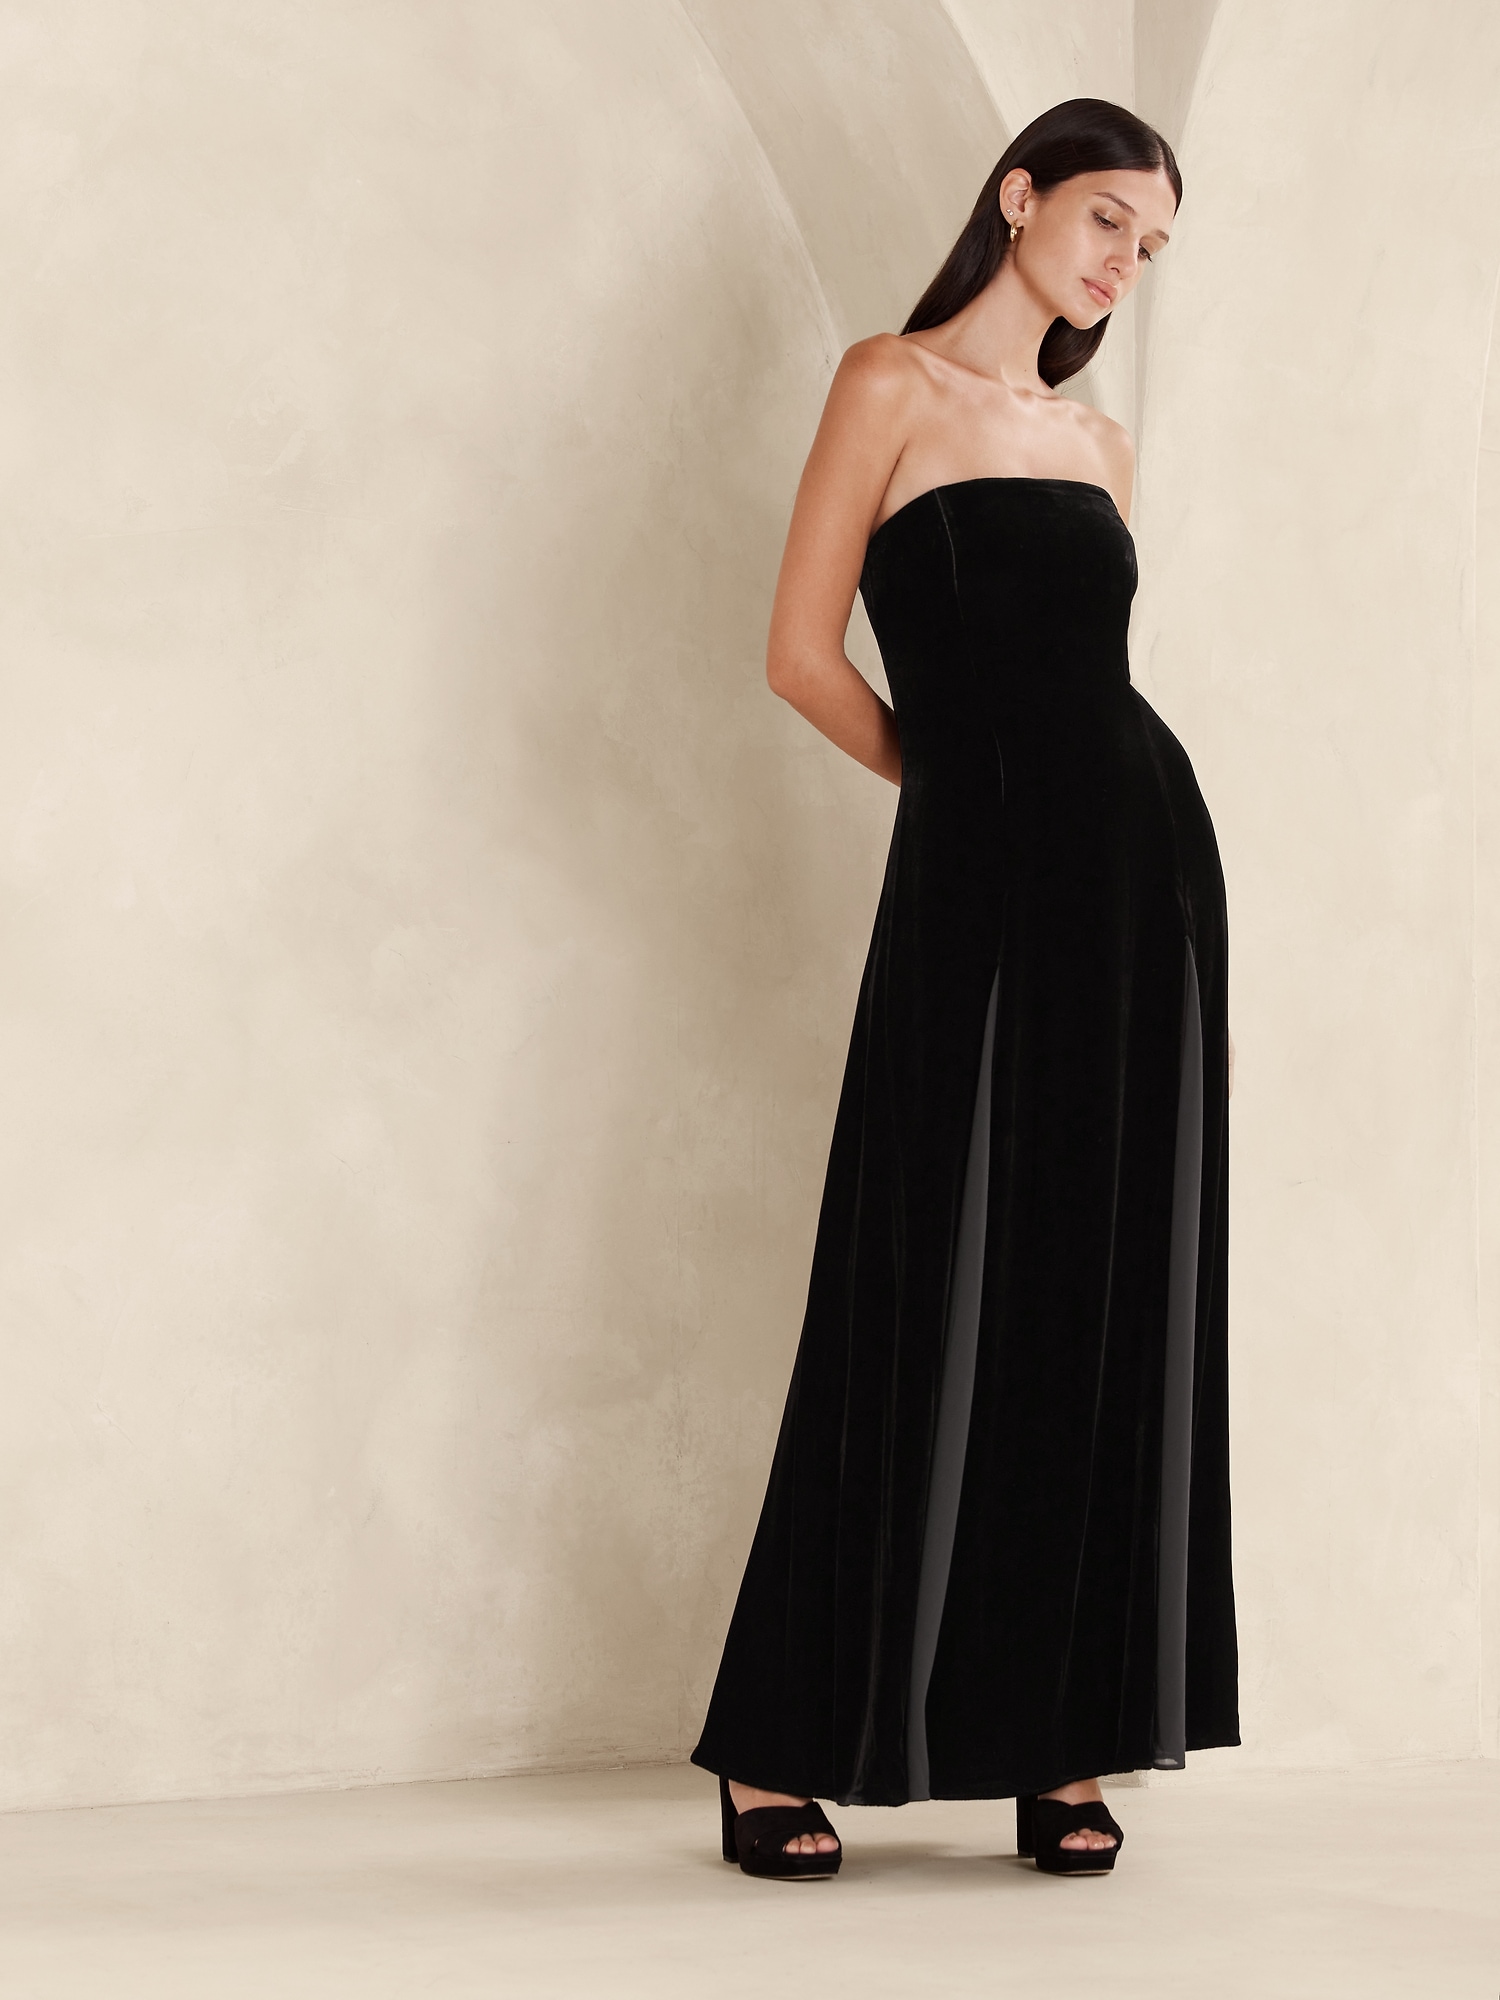 gap strapless black dress - Gem